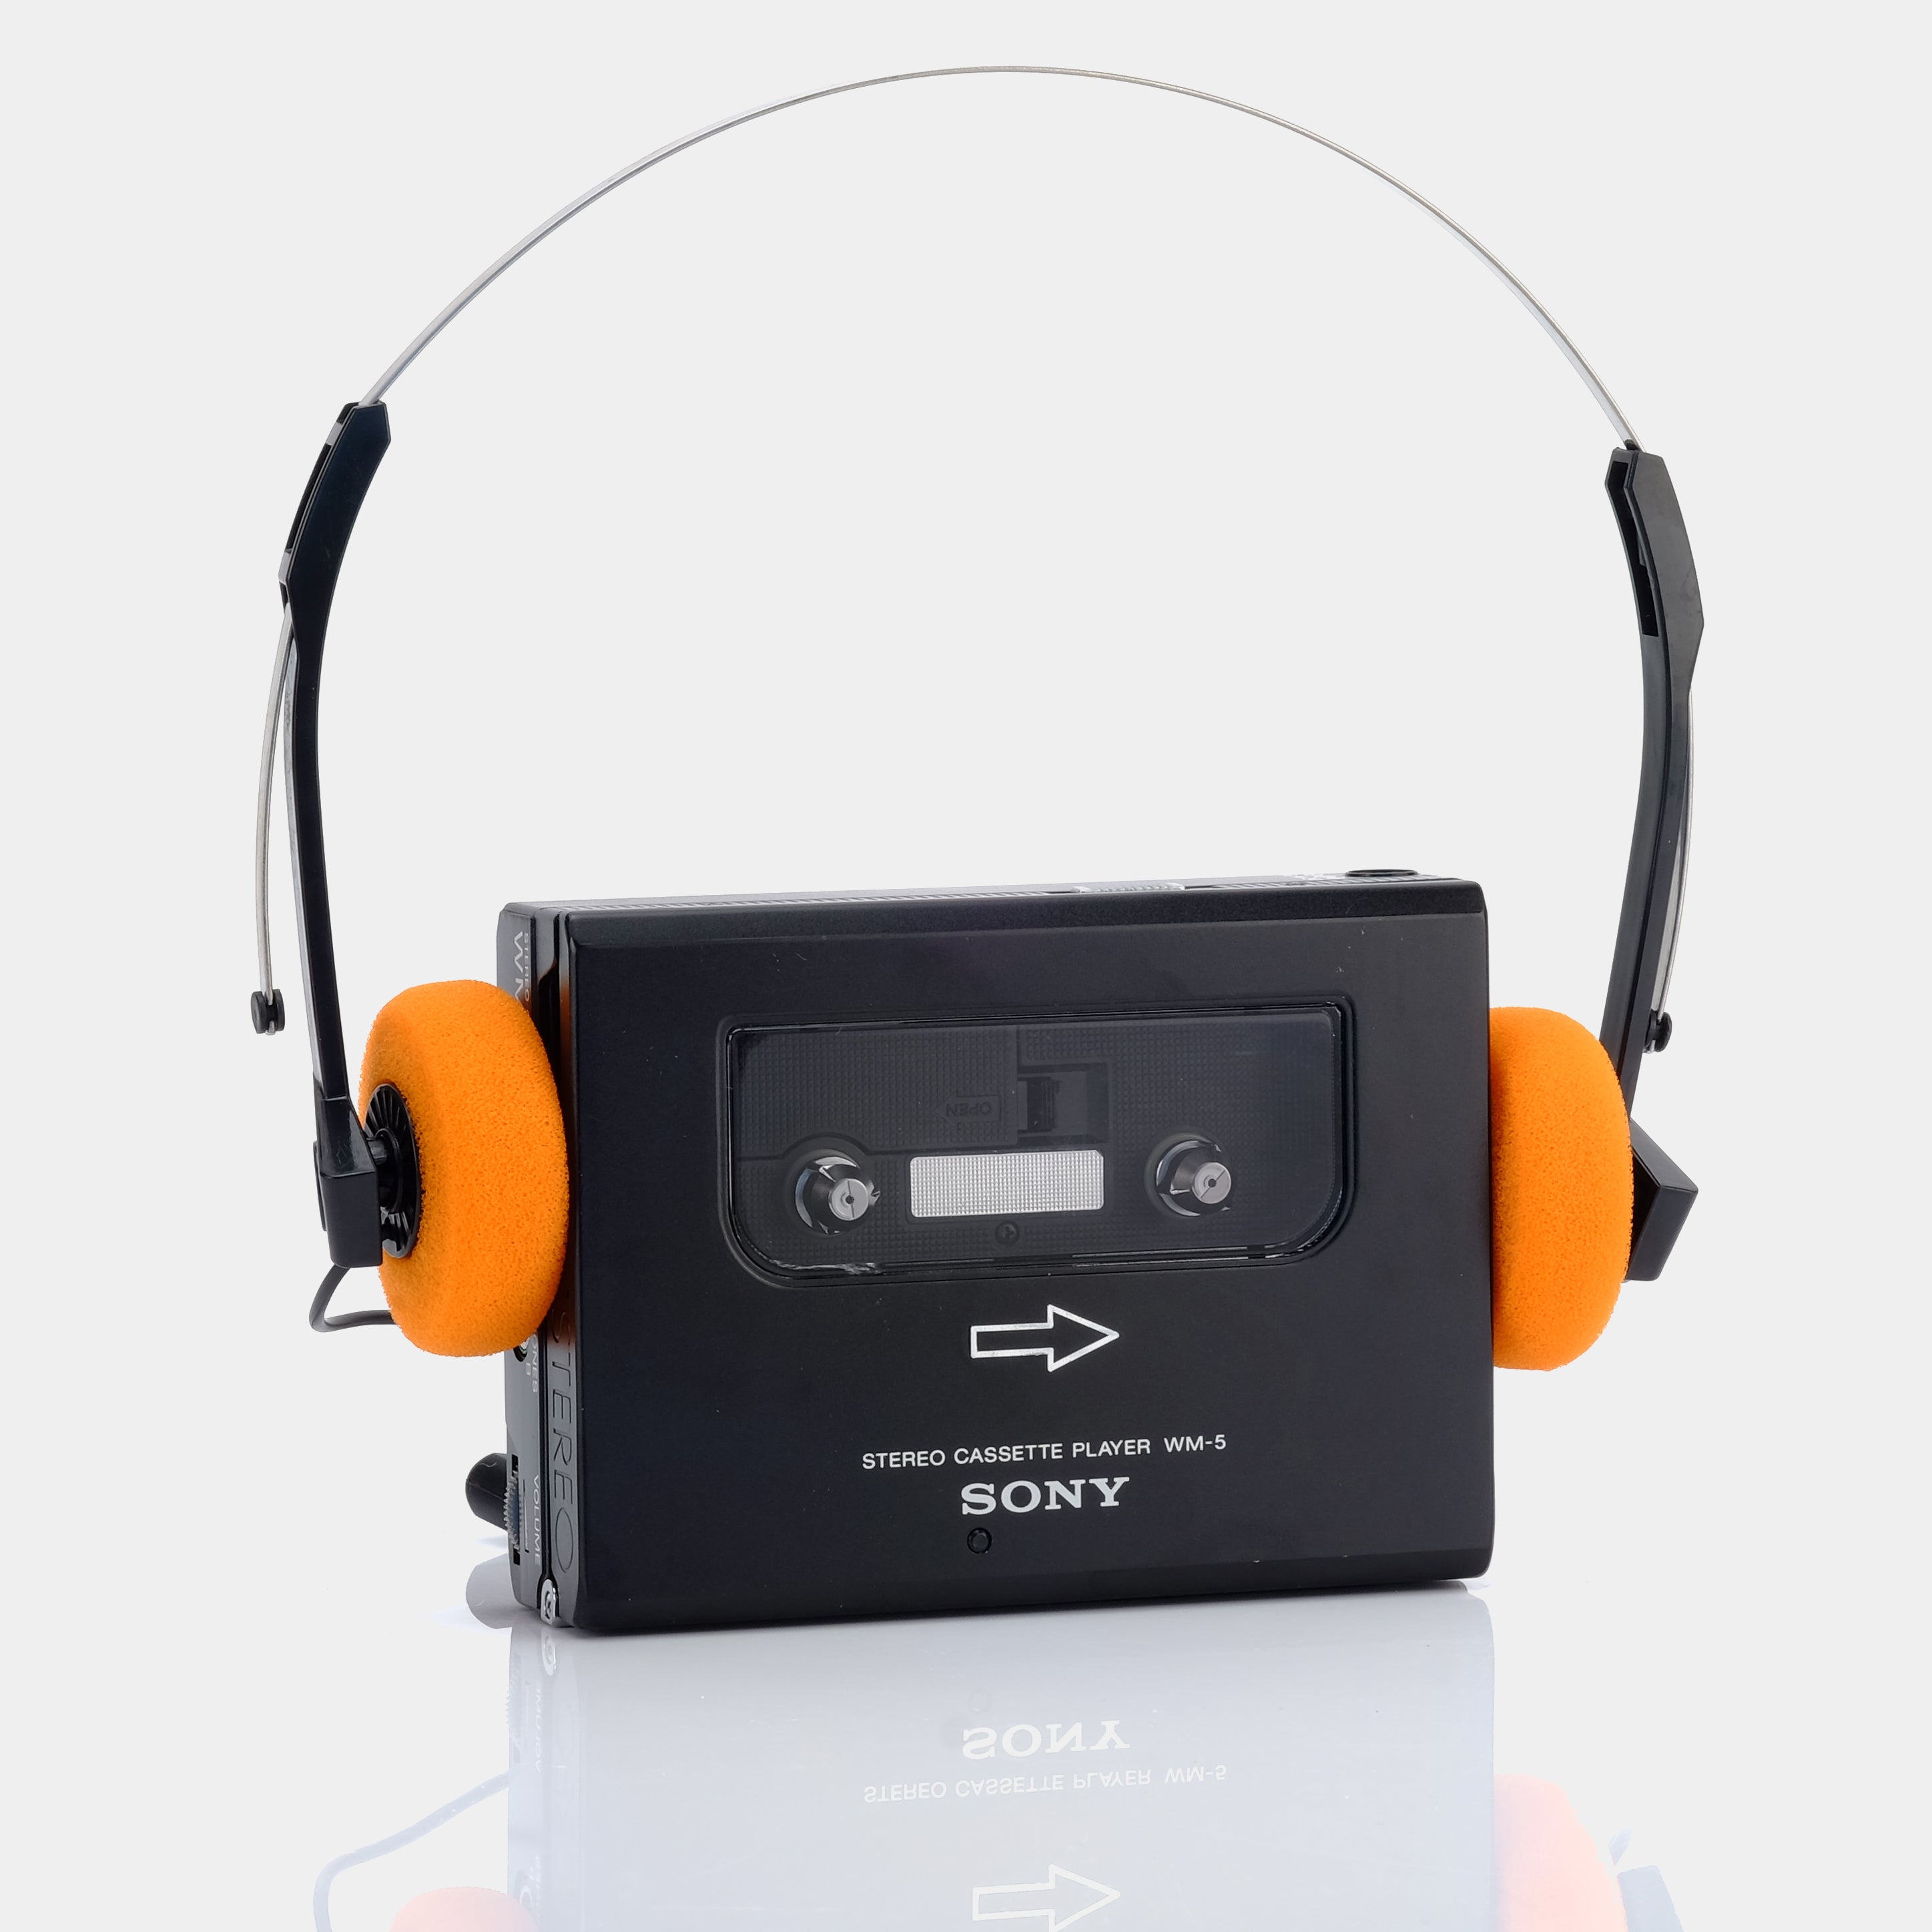 Sony Walkman WM-5 Portable Cassette Player